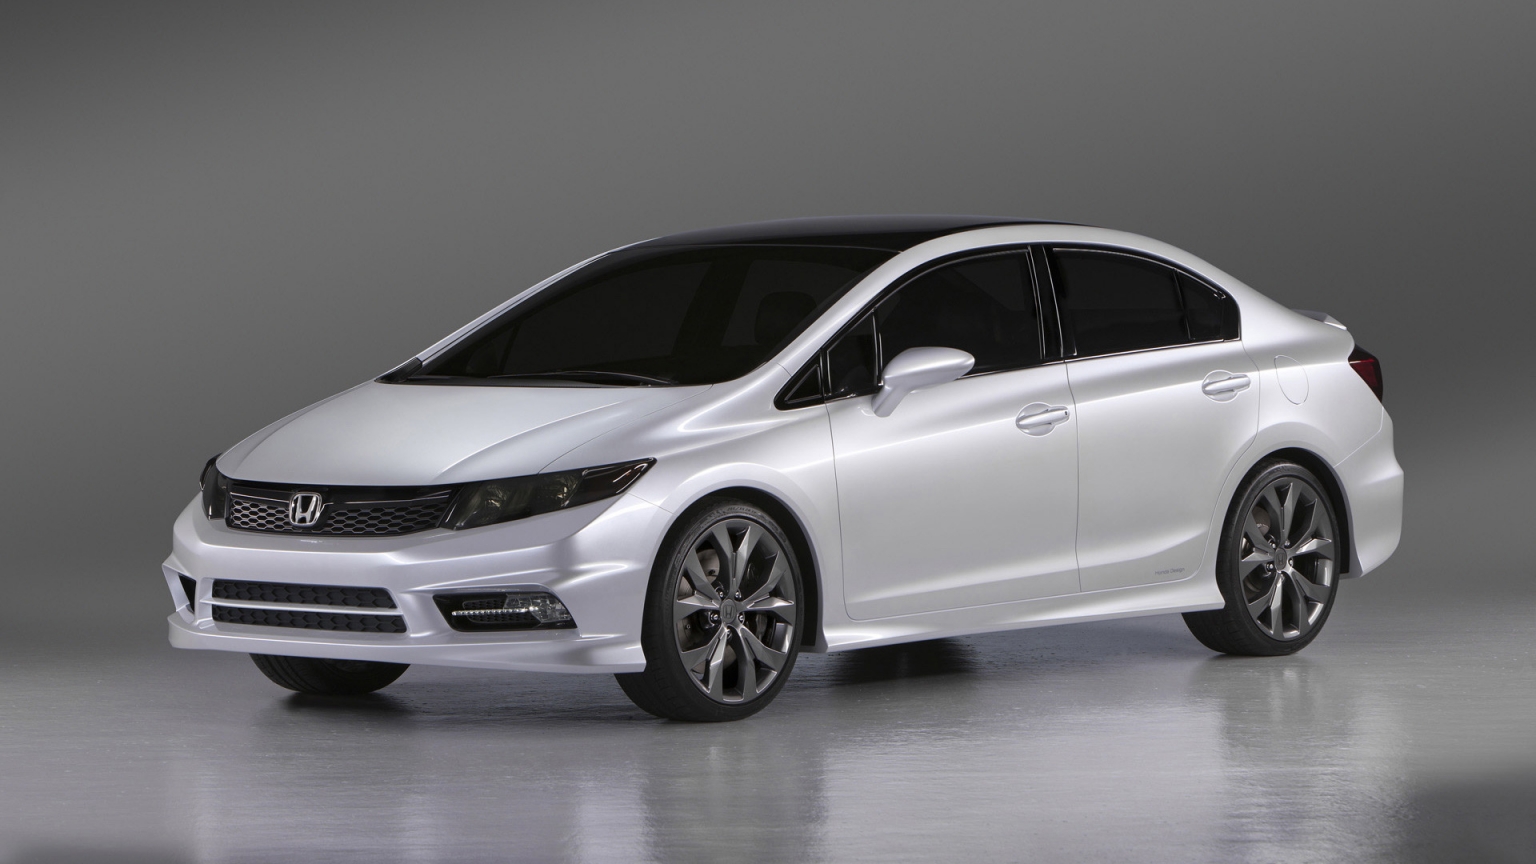 2011 Honda Civic Concept for 1536 x 864 HDTV resolution